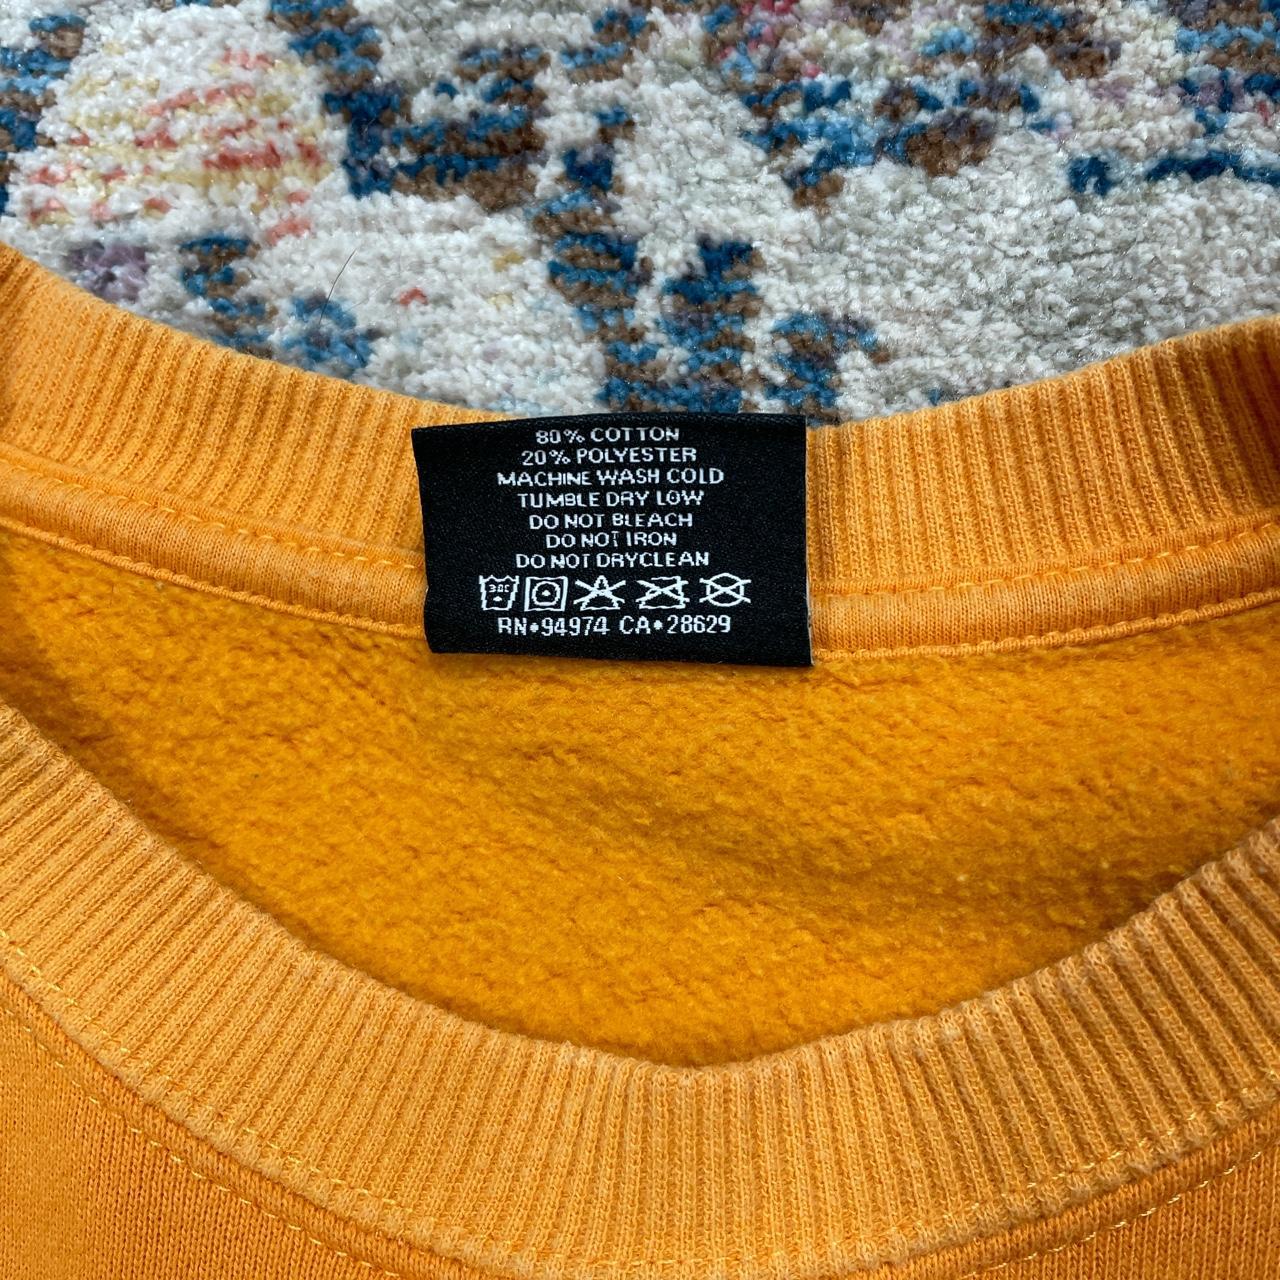 Stussy Orange Spellout Sweatshirt